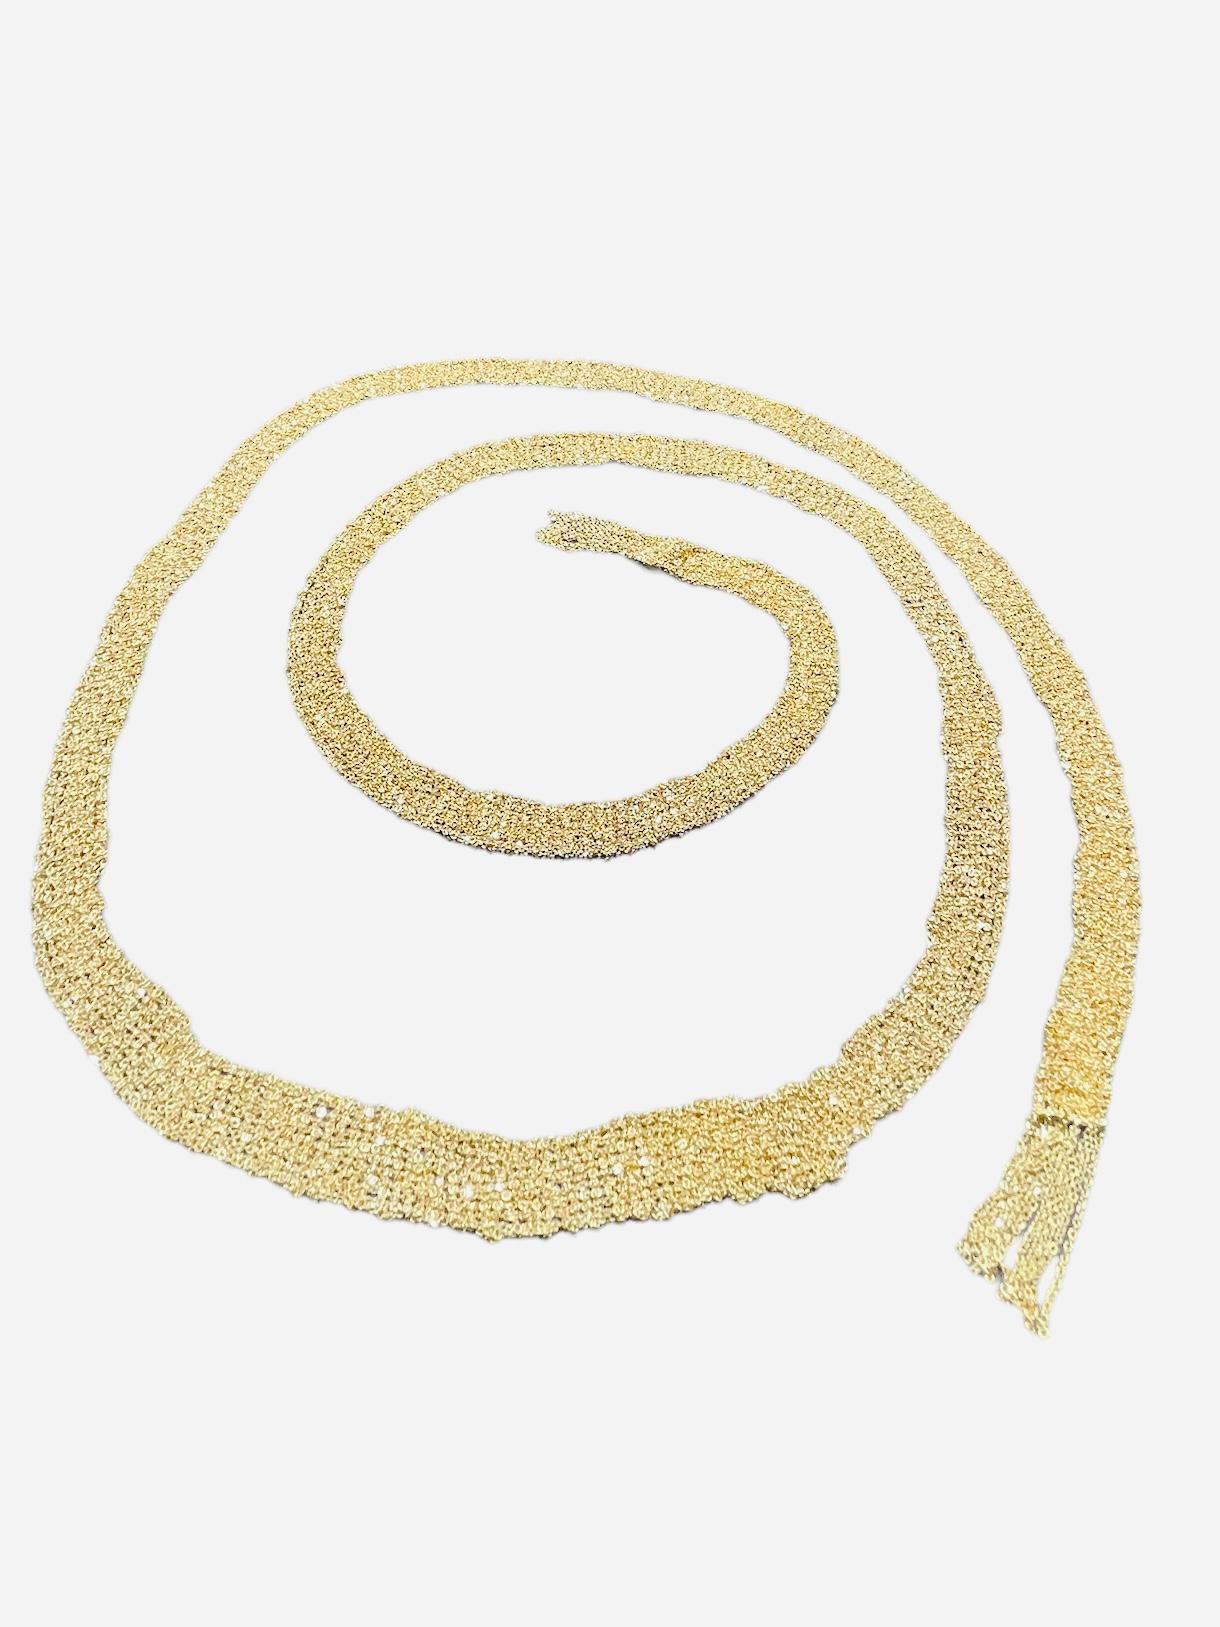 Italian 18K Gold Lariat Mesh Tassel Necklace  For Sale 1